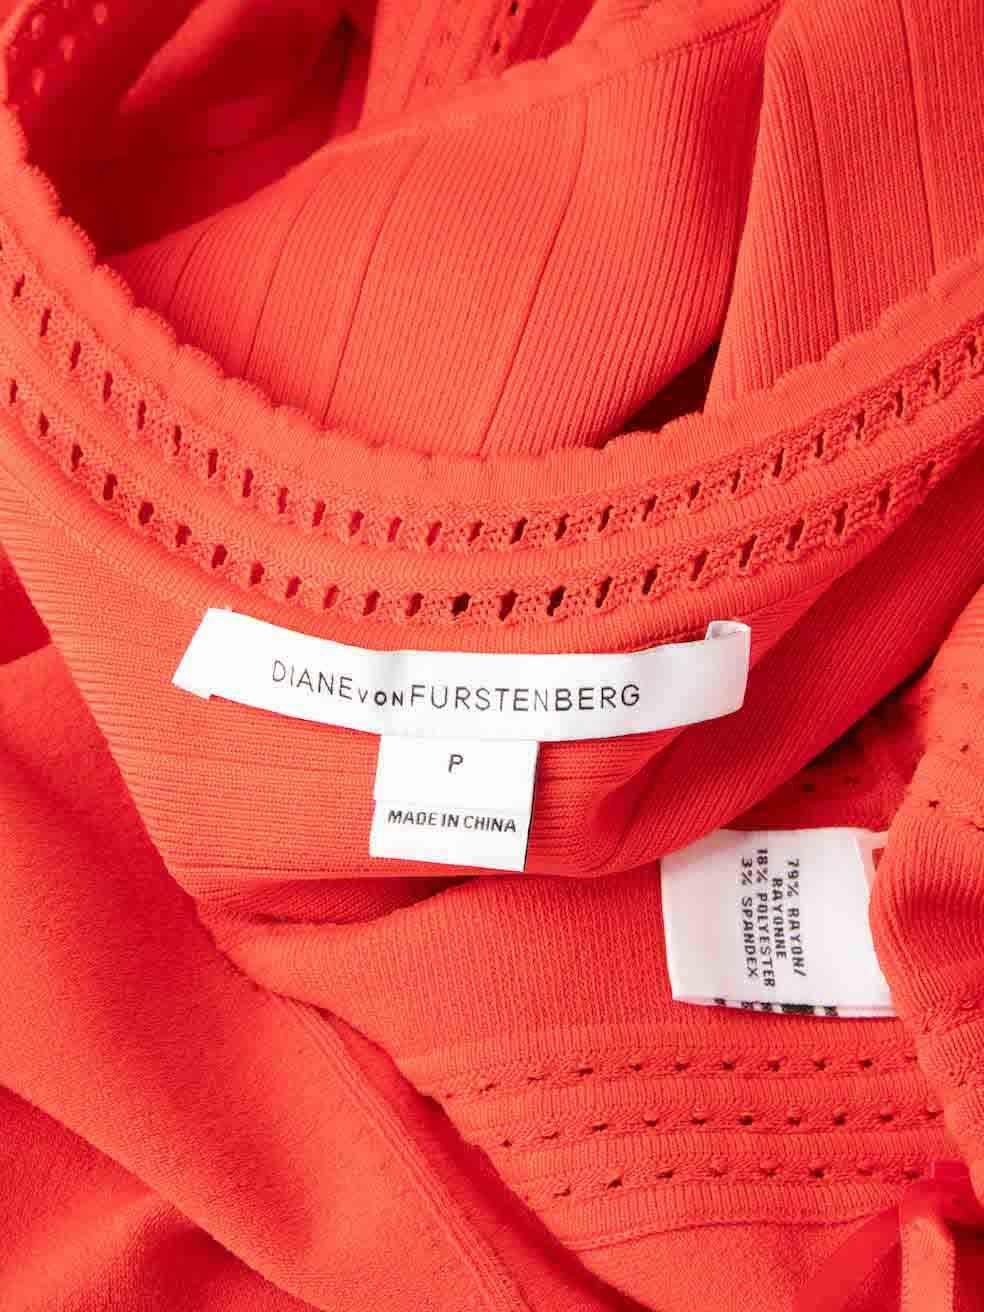 Diane Von Furstenberg Red Knit Mini Length Dress Size S For Sale 3